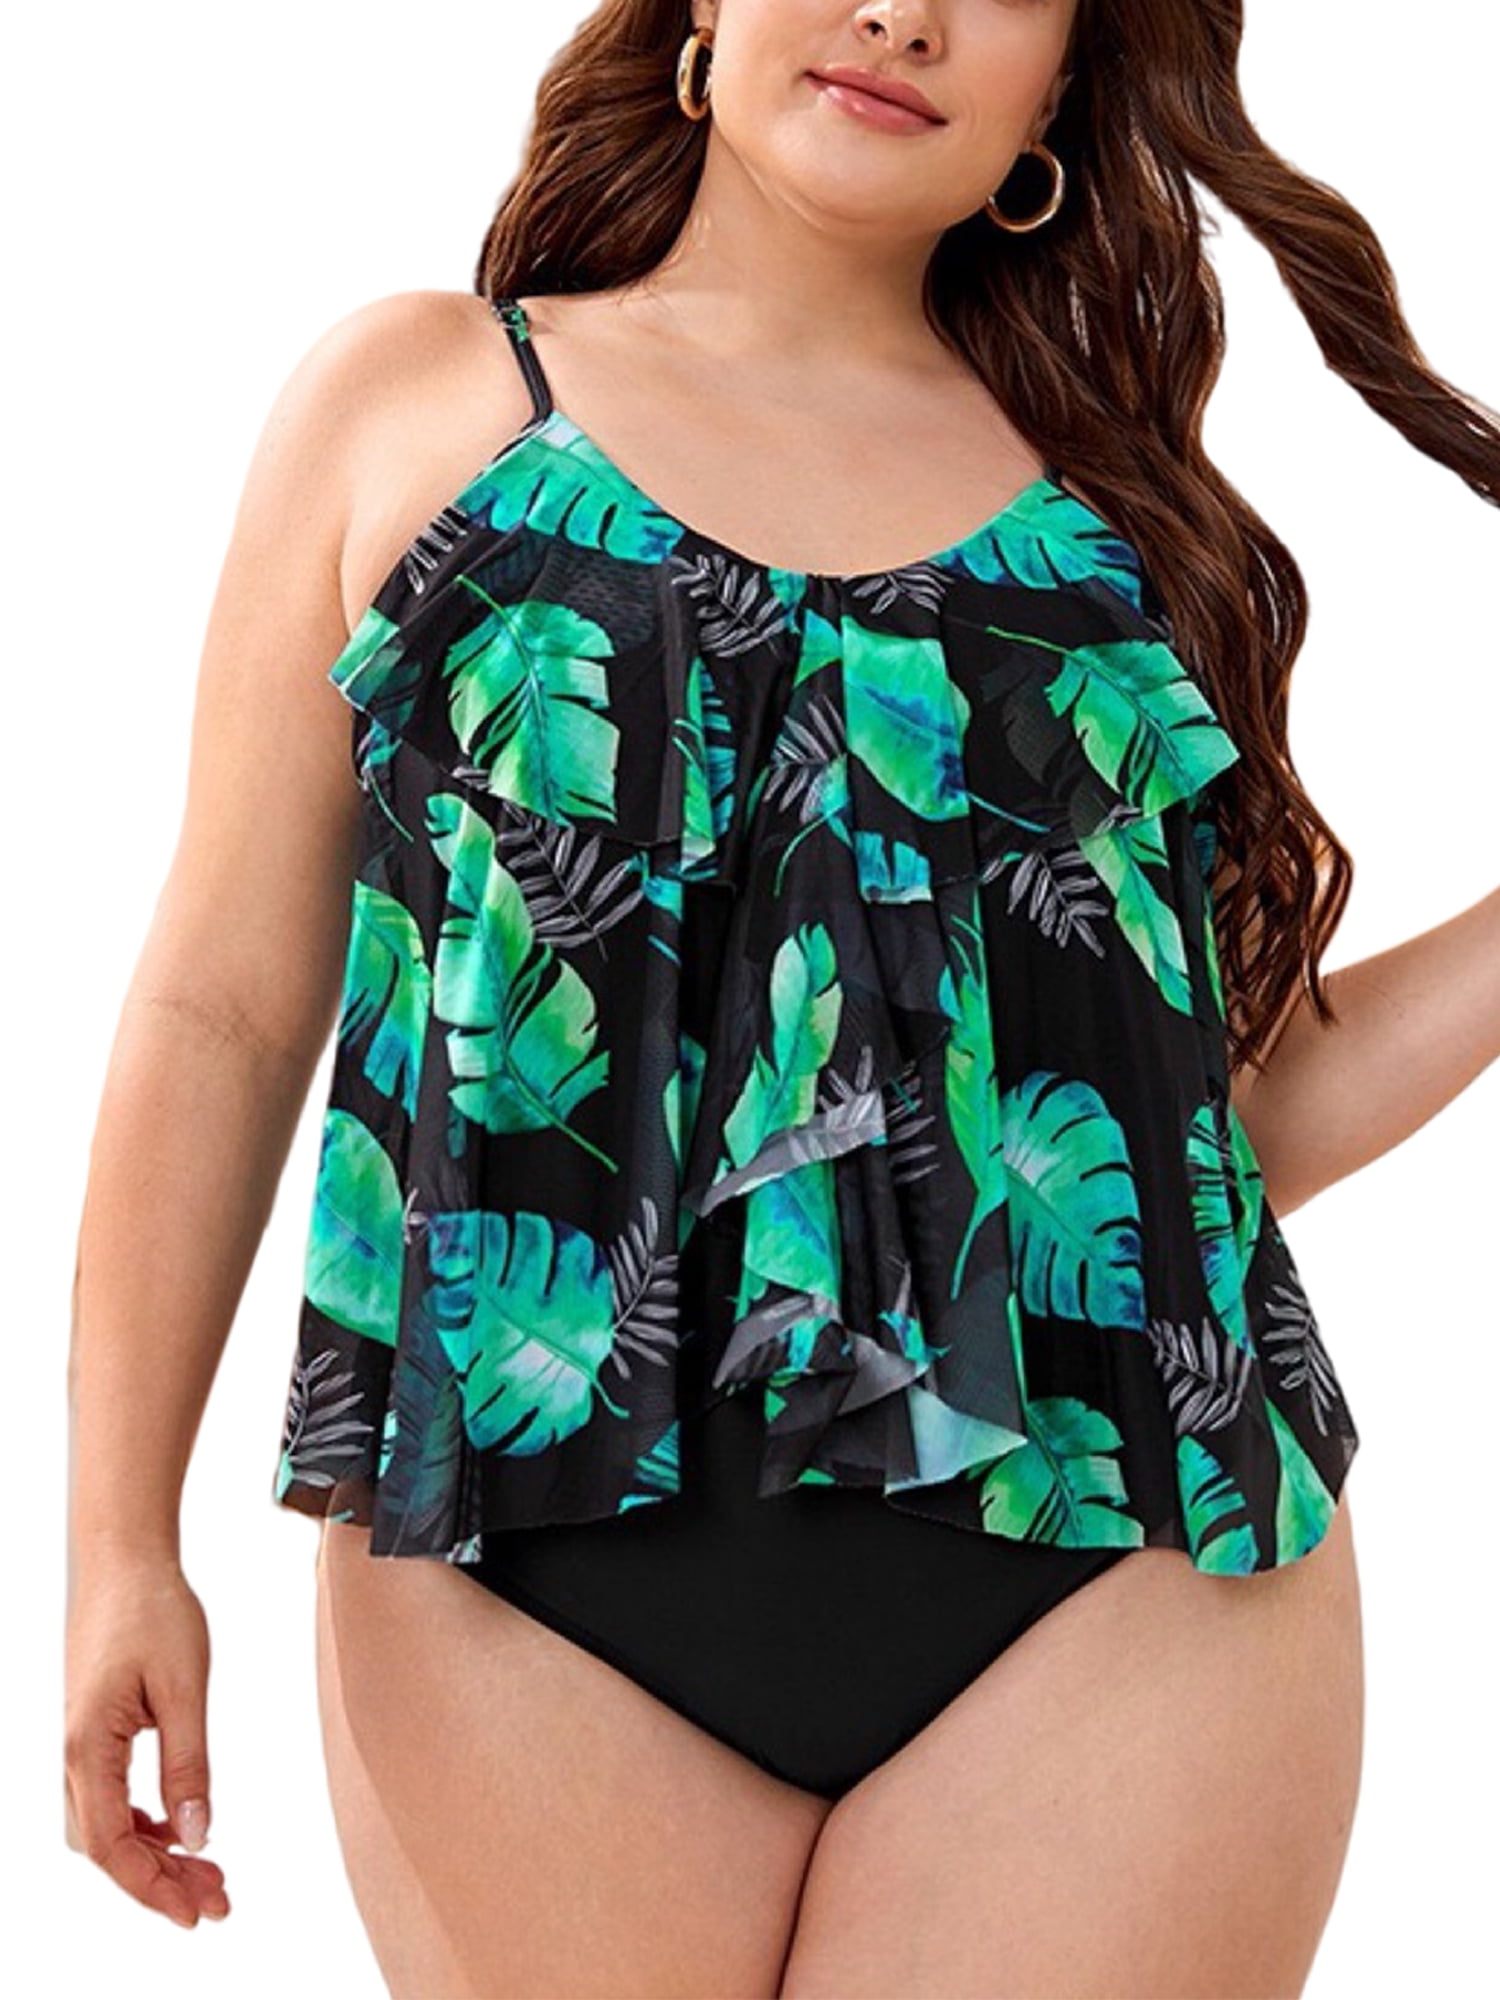 DEELIN Tankini Sets Swimsuits Womens Plus Size Beachwear Striped Print Boy Shorts Bathing Surfing Swimwear Bikini Camisole Swimming Costume 2PCS 